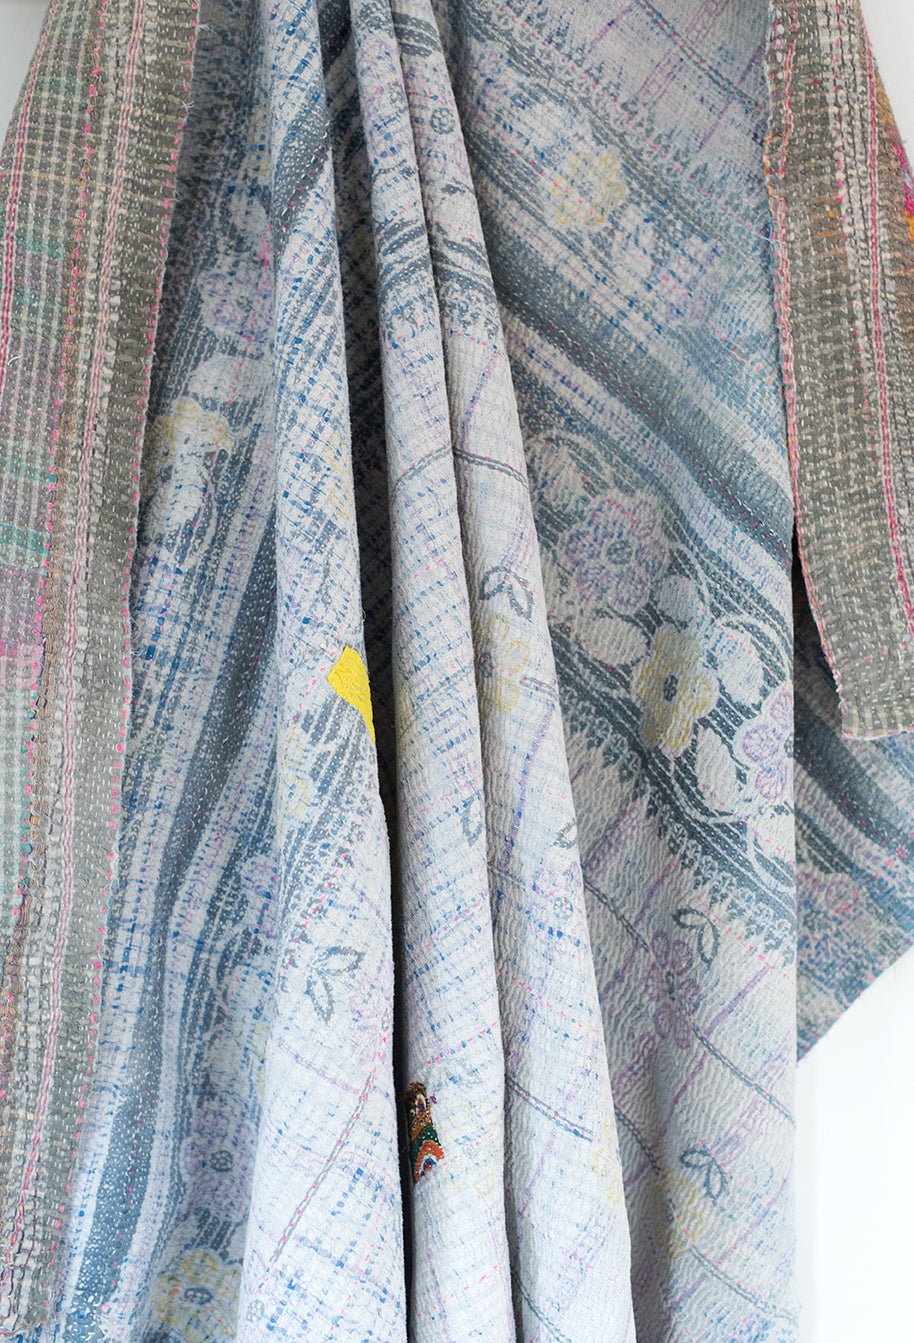 The Tulip Quilt – Vintage Kantha Quilt